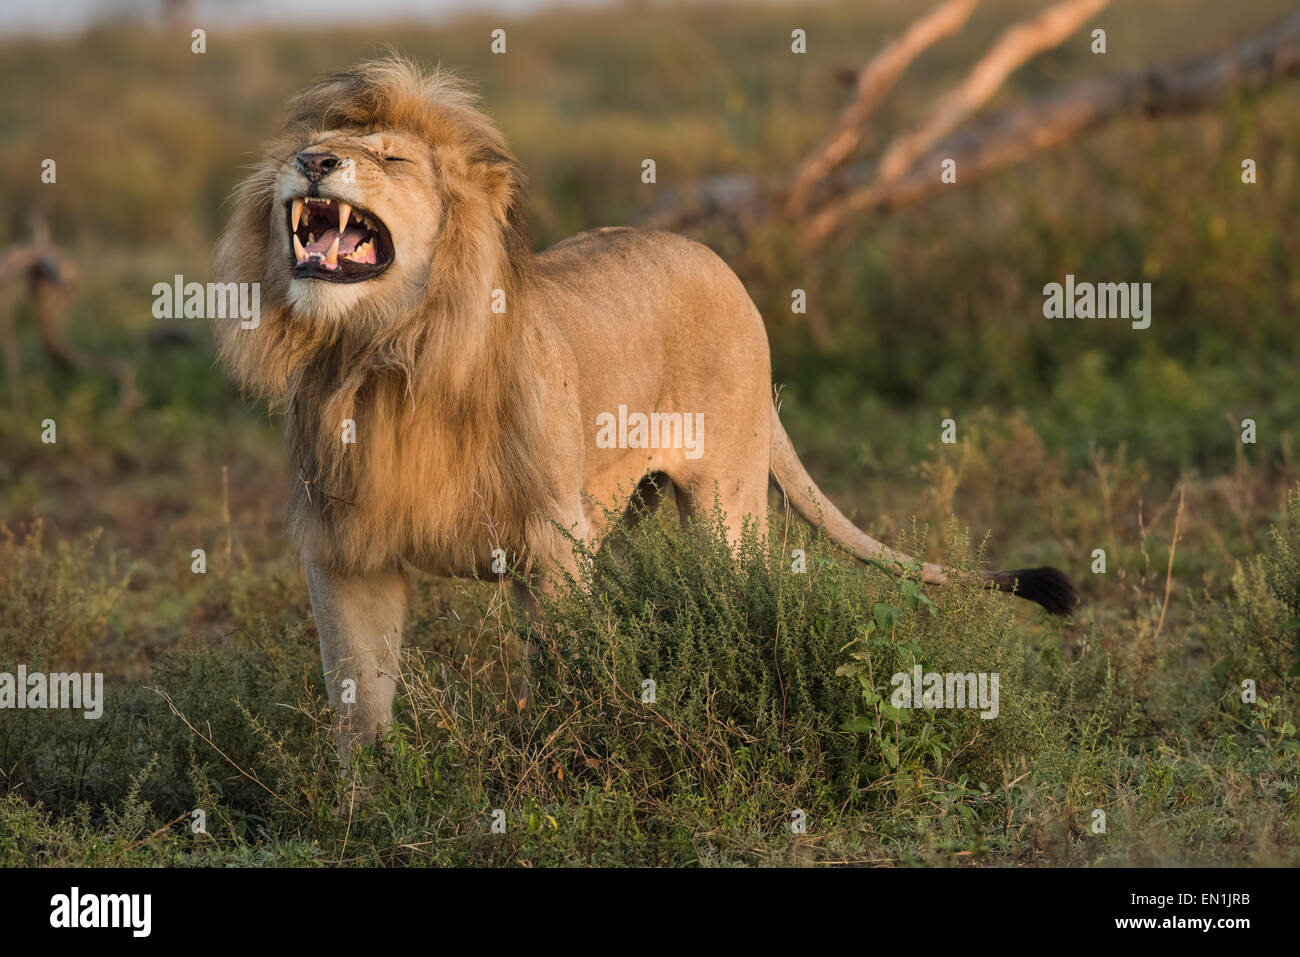 Male lion flehmen behavior. Stock Photo